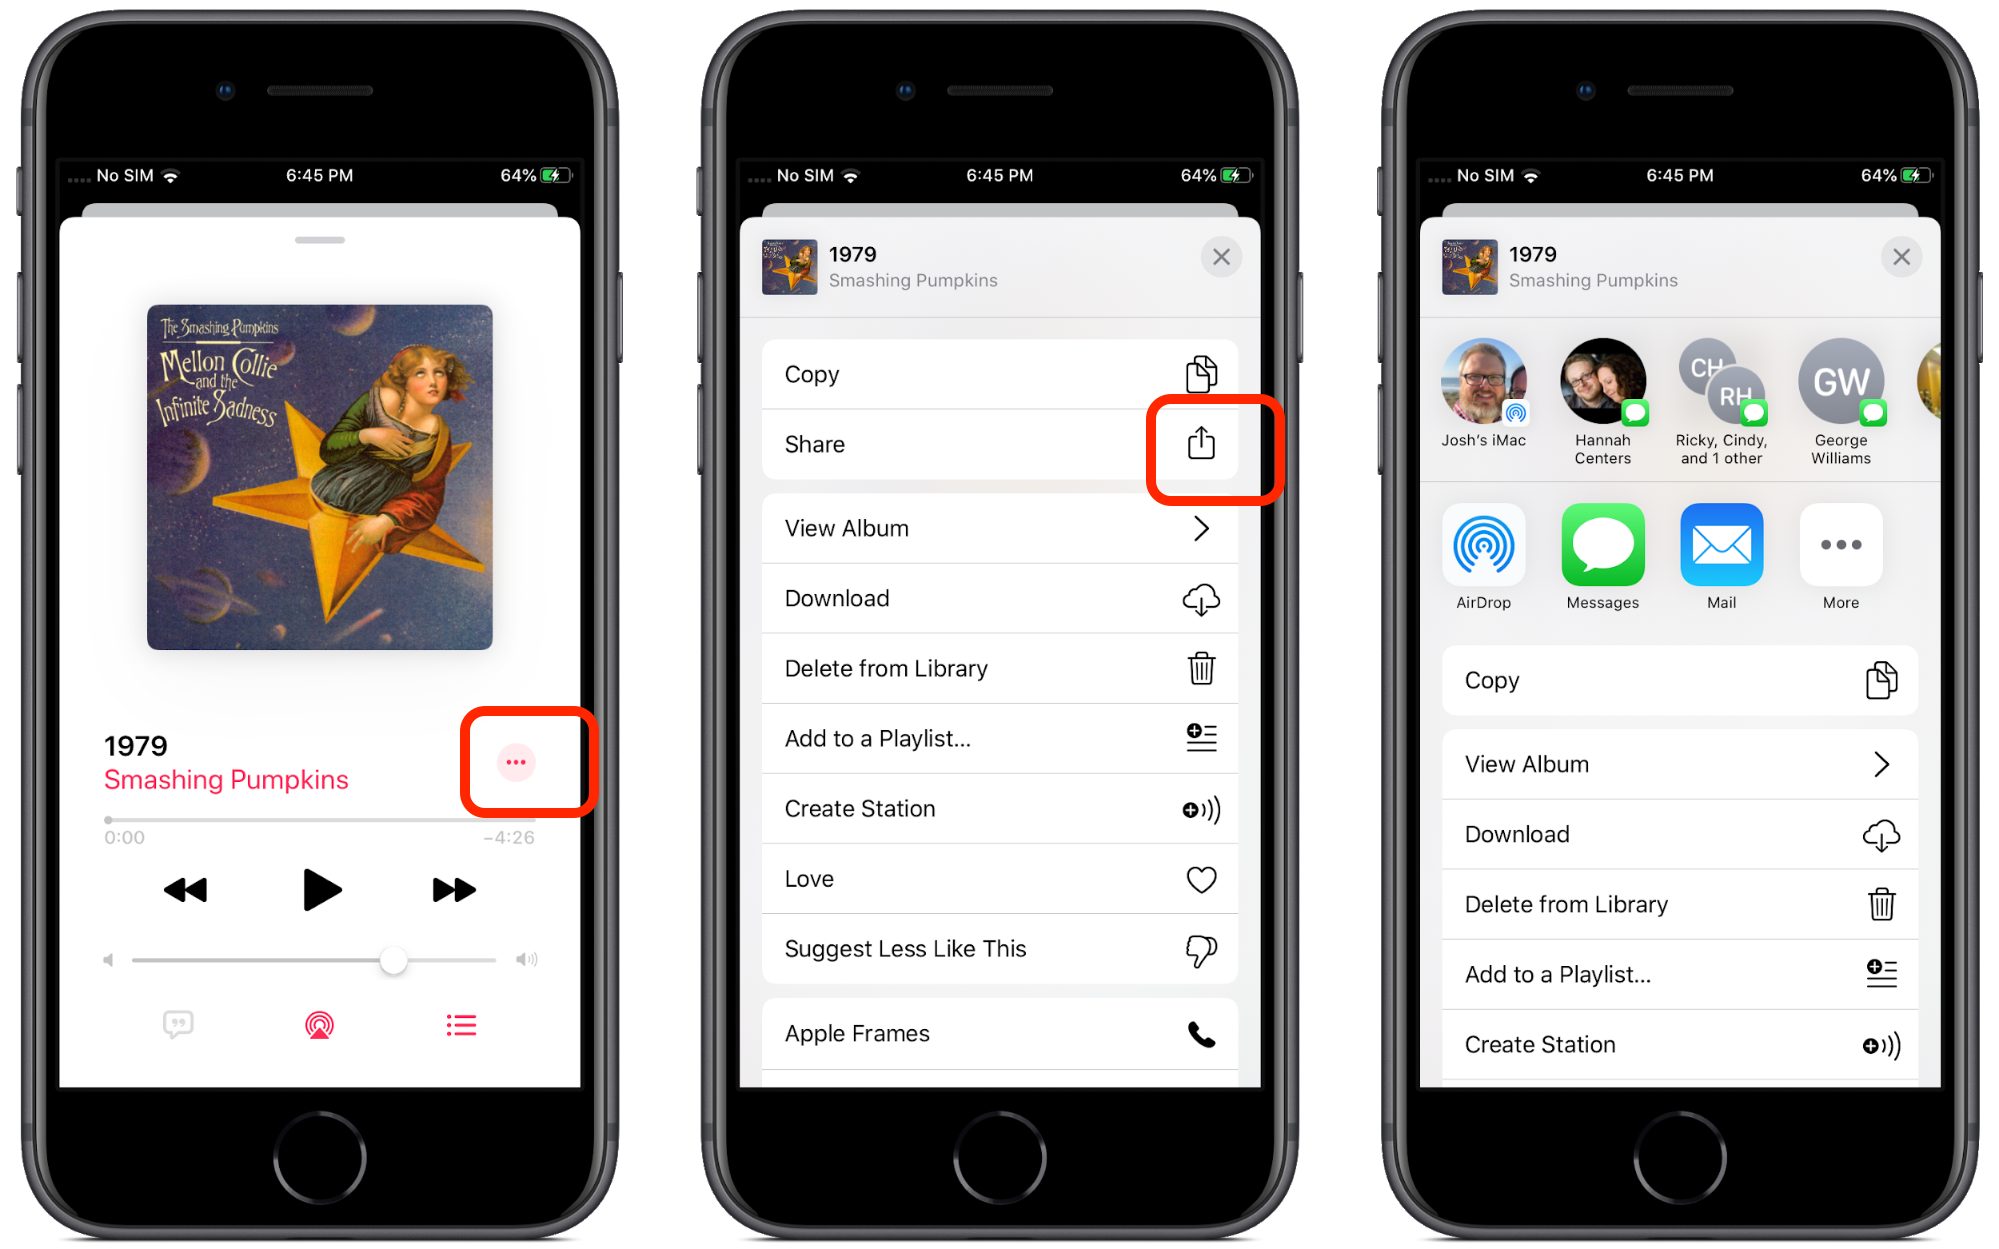 The Music app in iOS 13